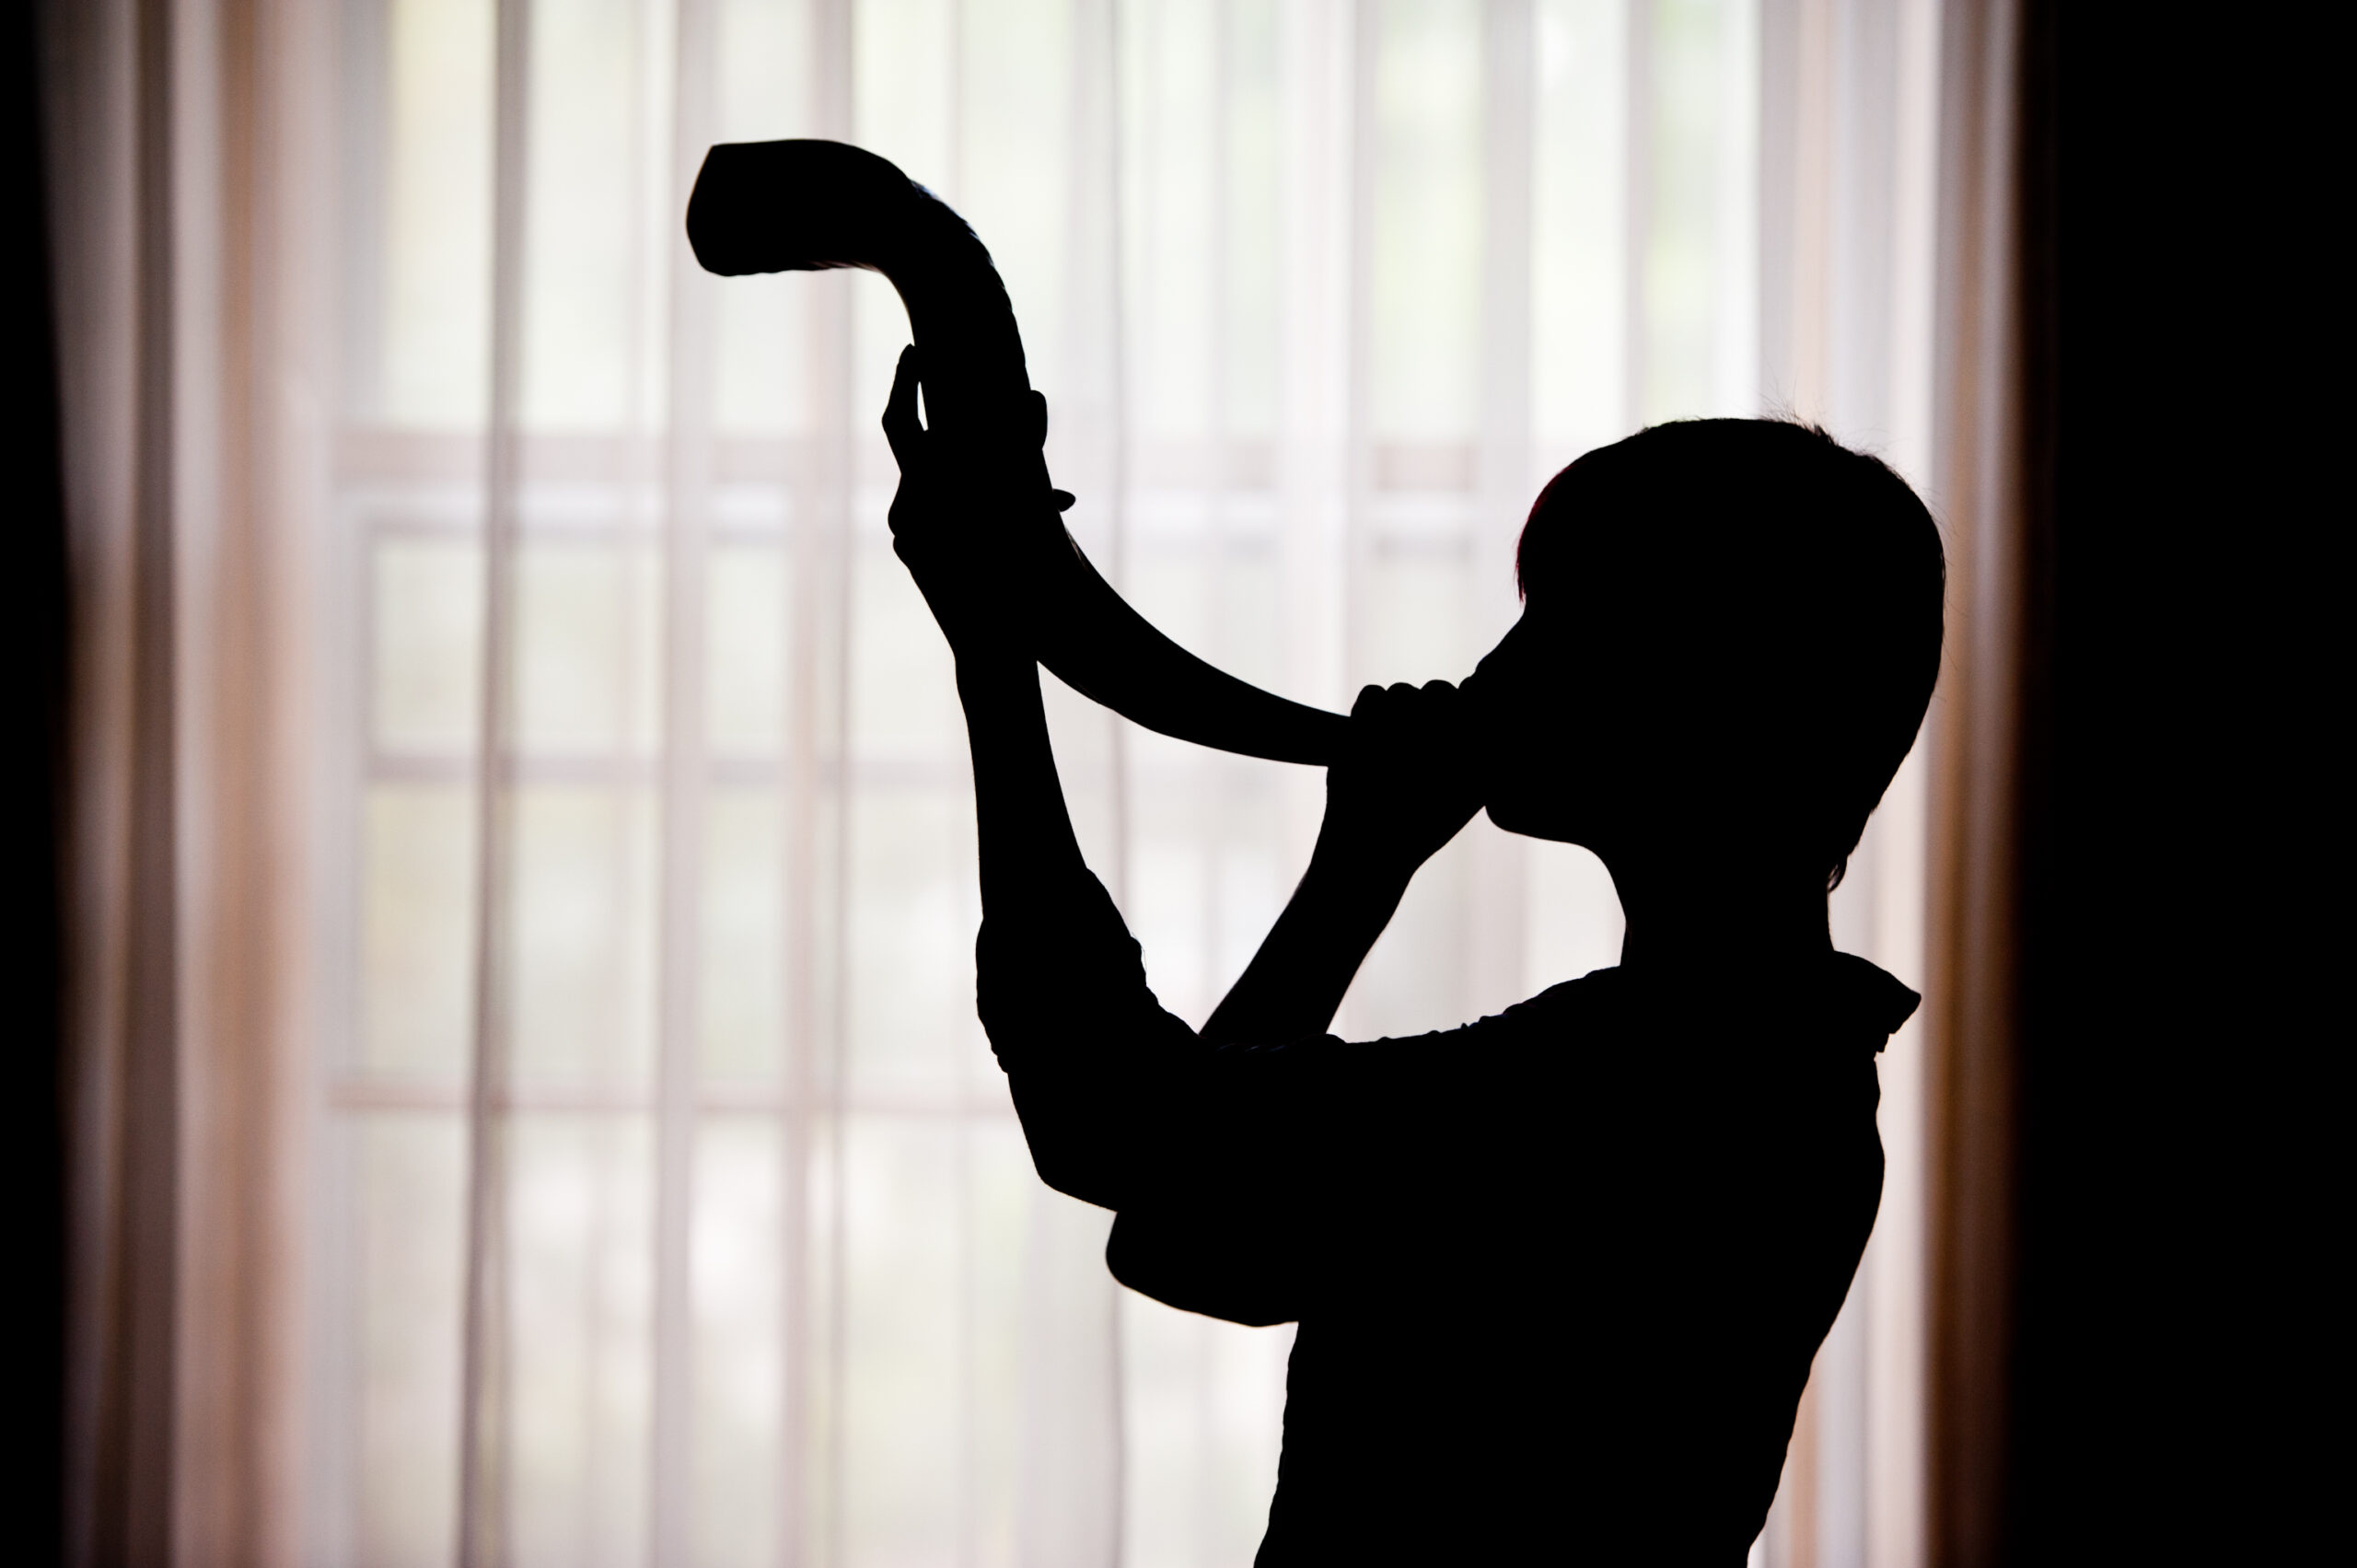 person in silhouette blowing shofar against white curtains